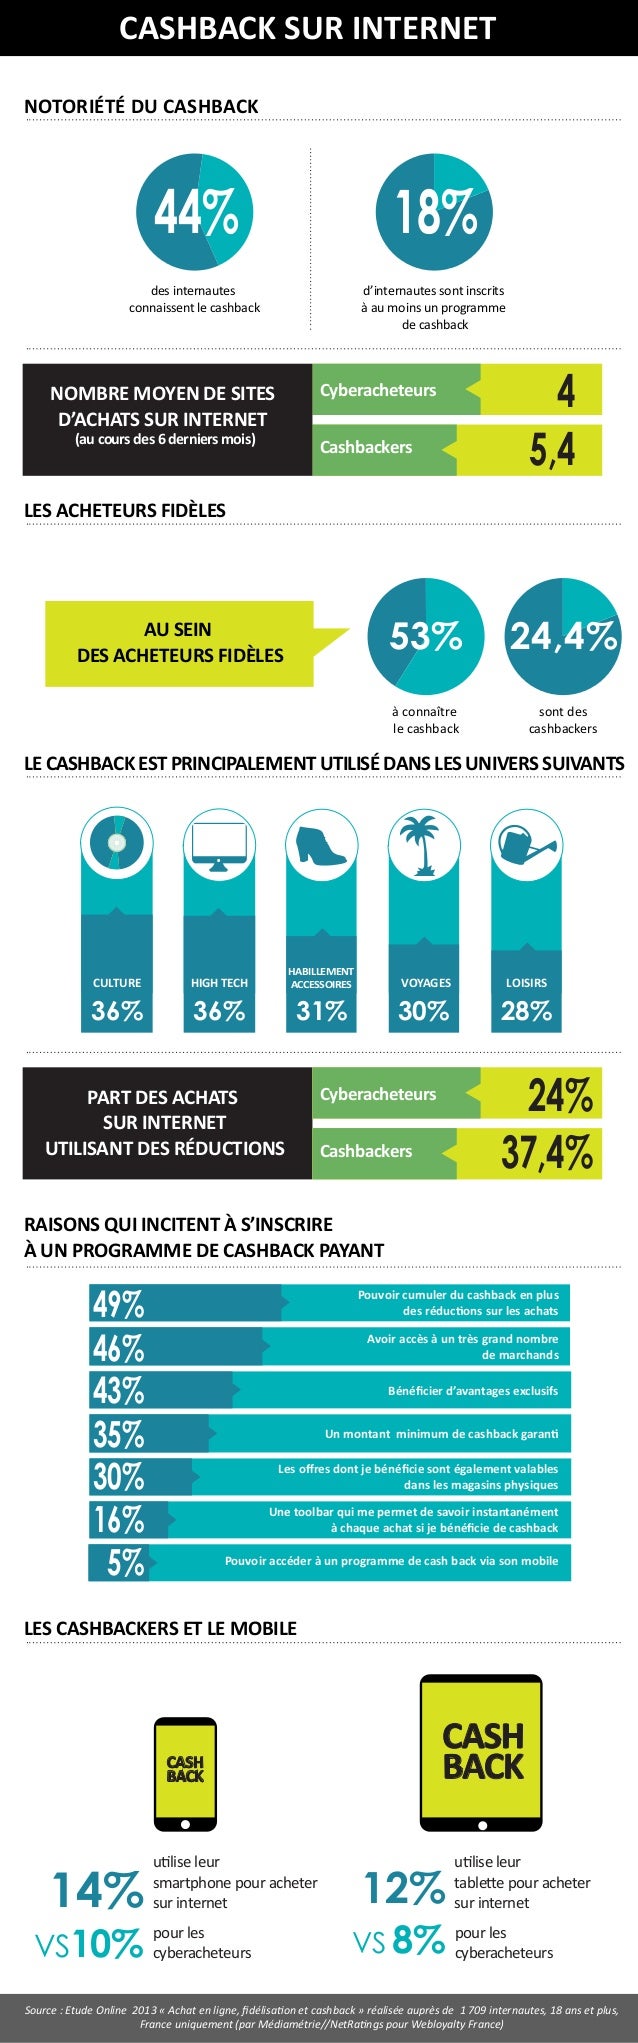 Le cash-back gagnant sur Internet en France par Webloyalty.fr